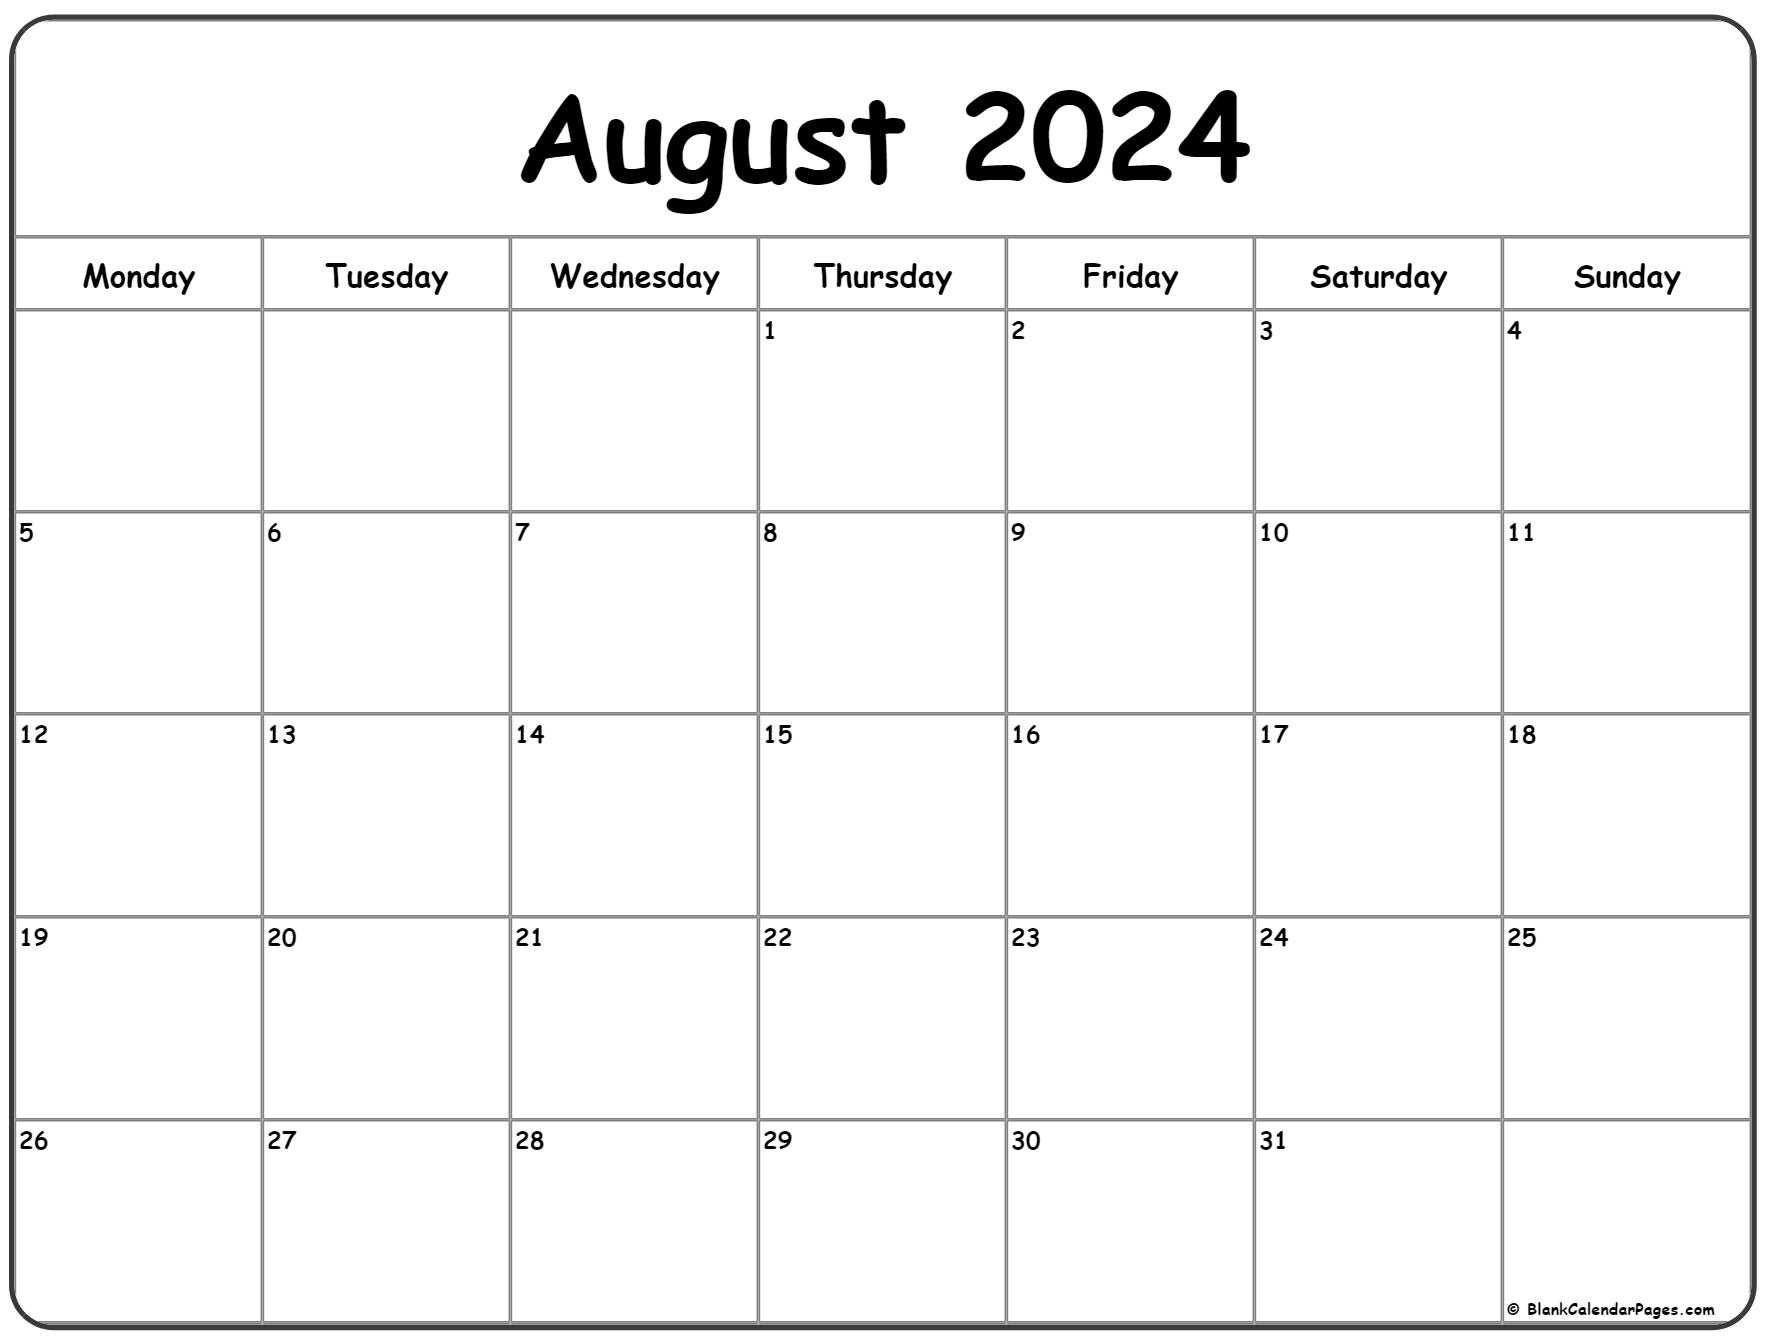 August 2024 Monday Calendar | Monday To Sunday for 2024 August Printable Calendar